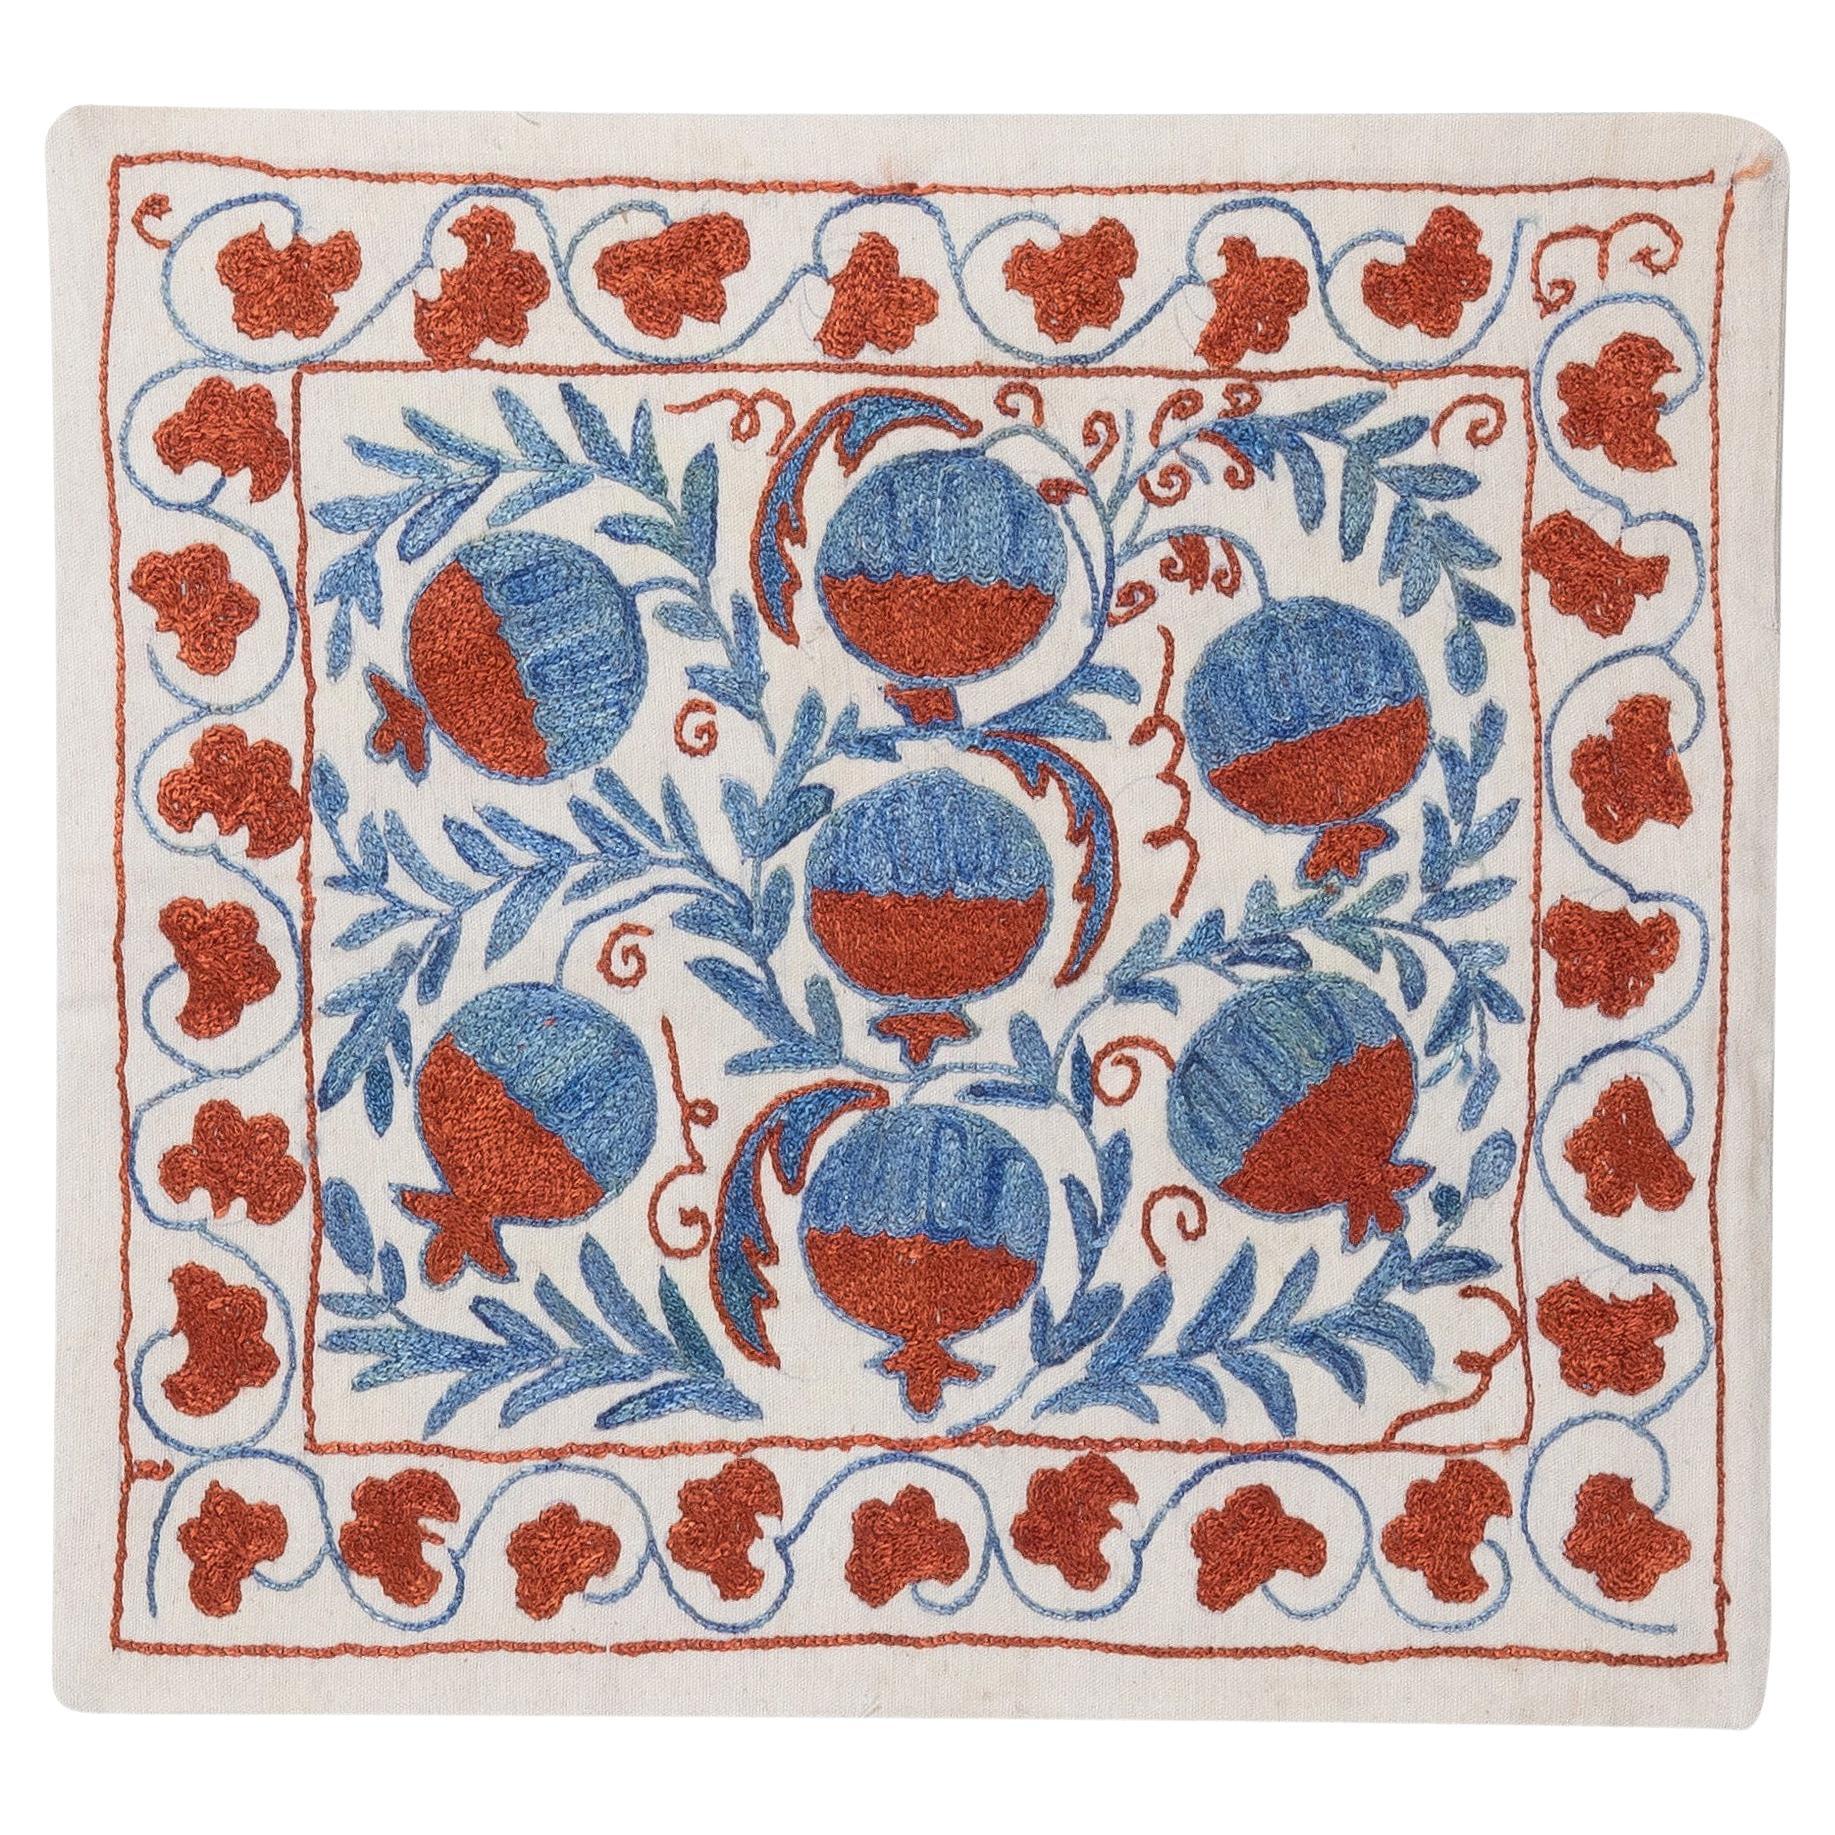 16"x17" Silk Embroidery Cushion Cover, Uzbek Throw Pillow Cover, Suzani Sham For Sale